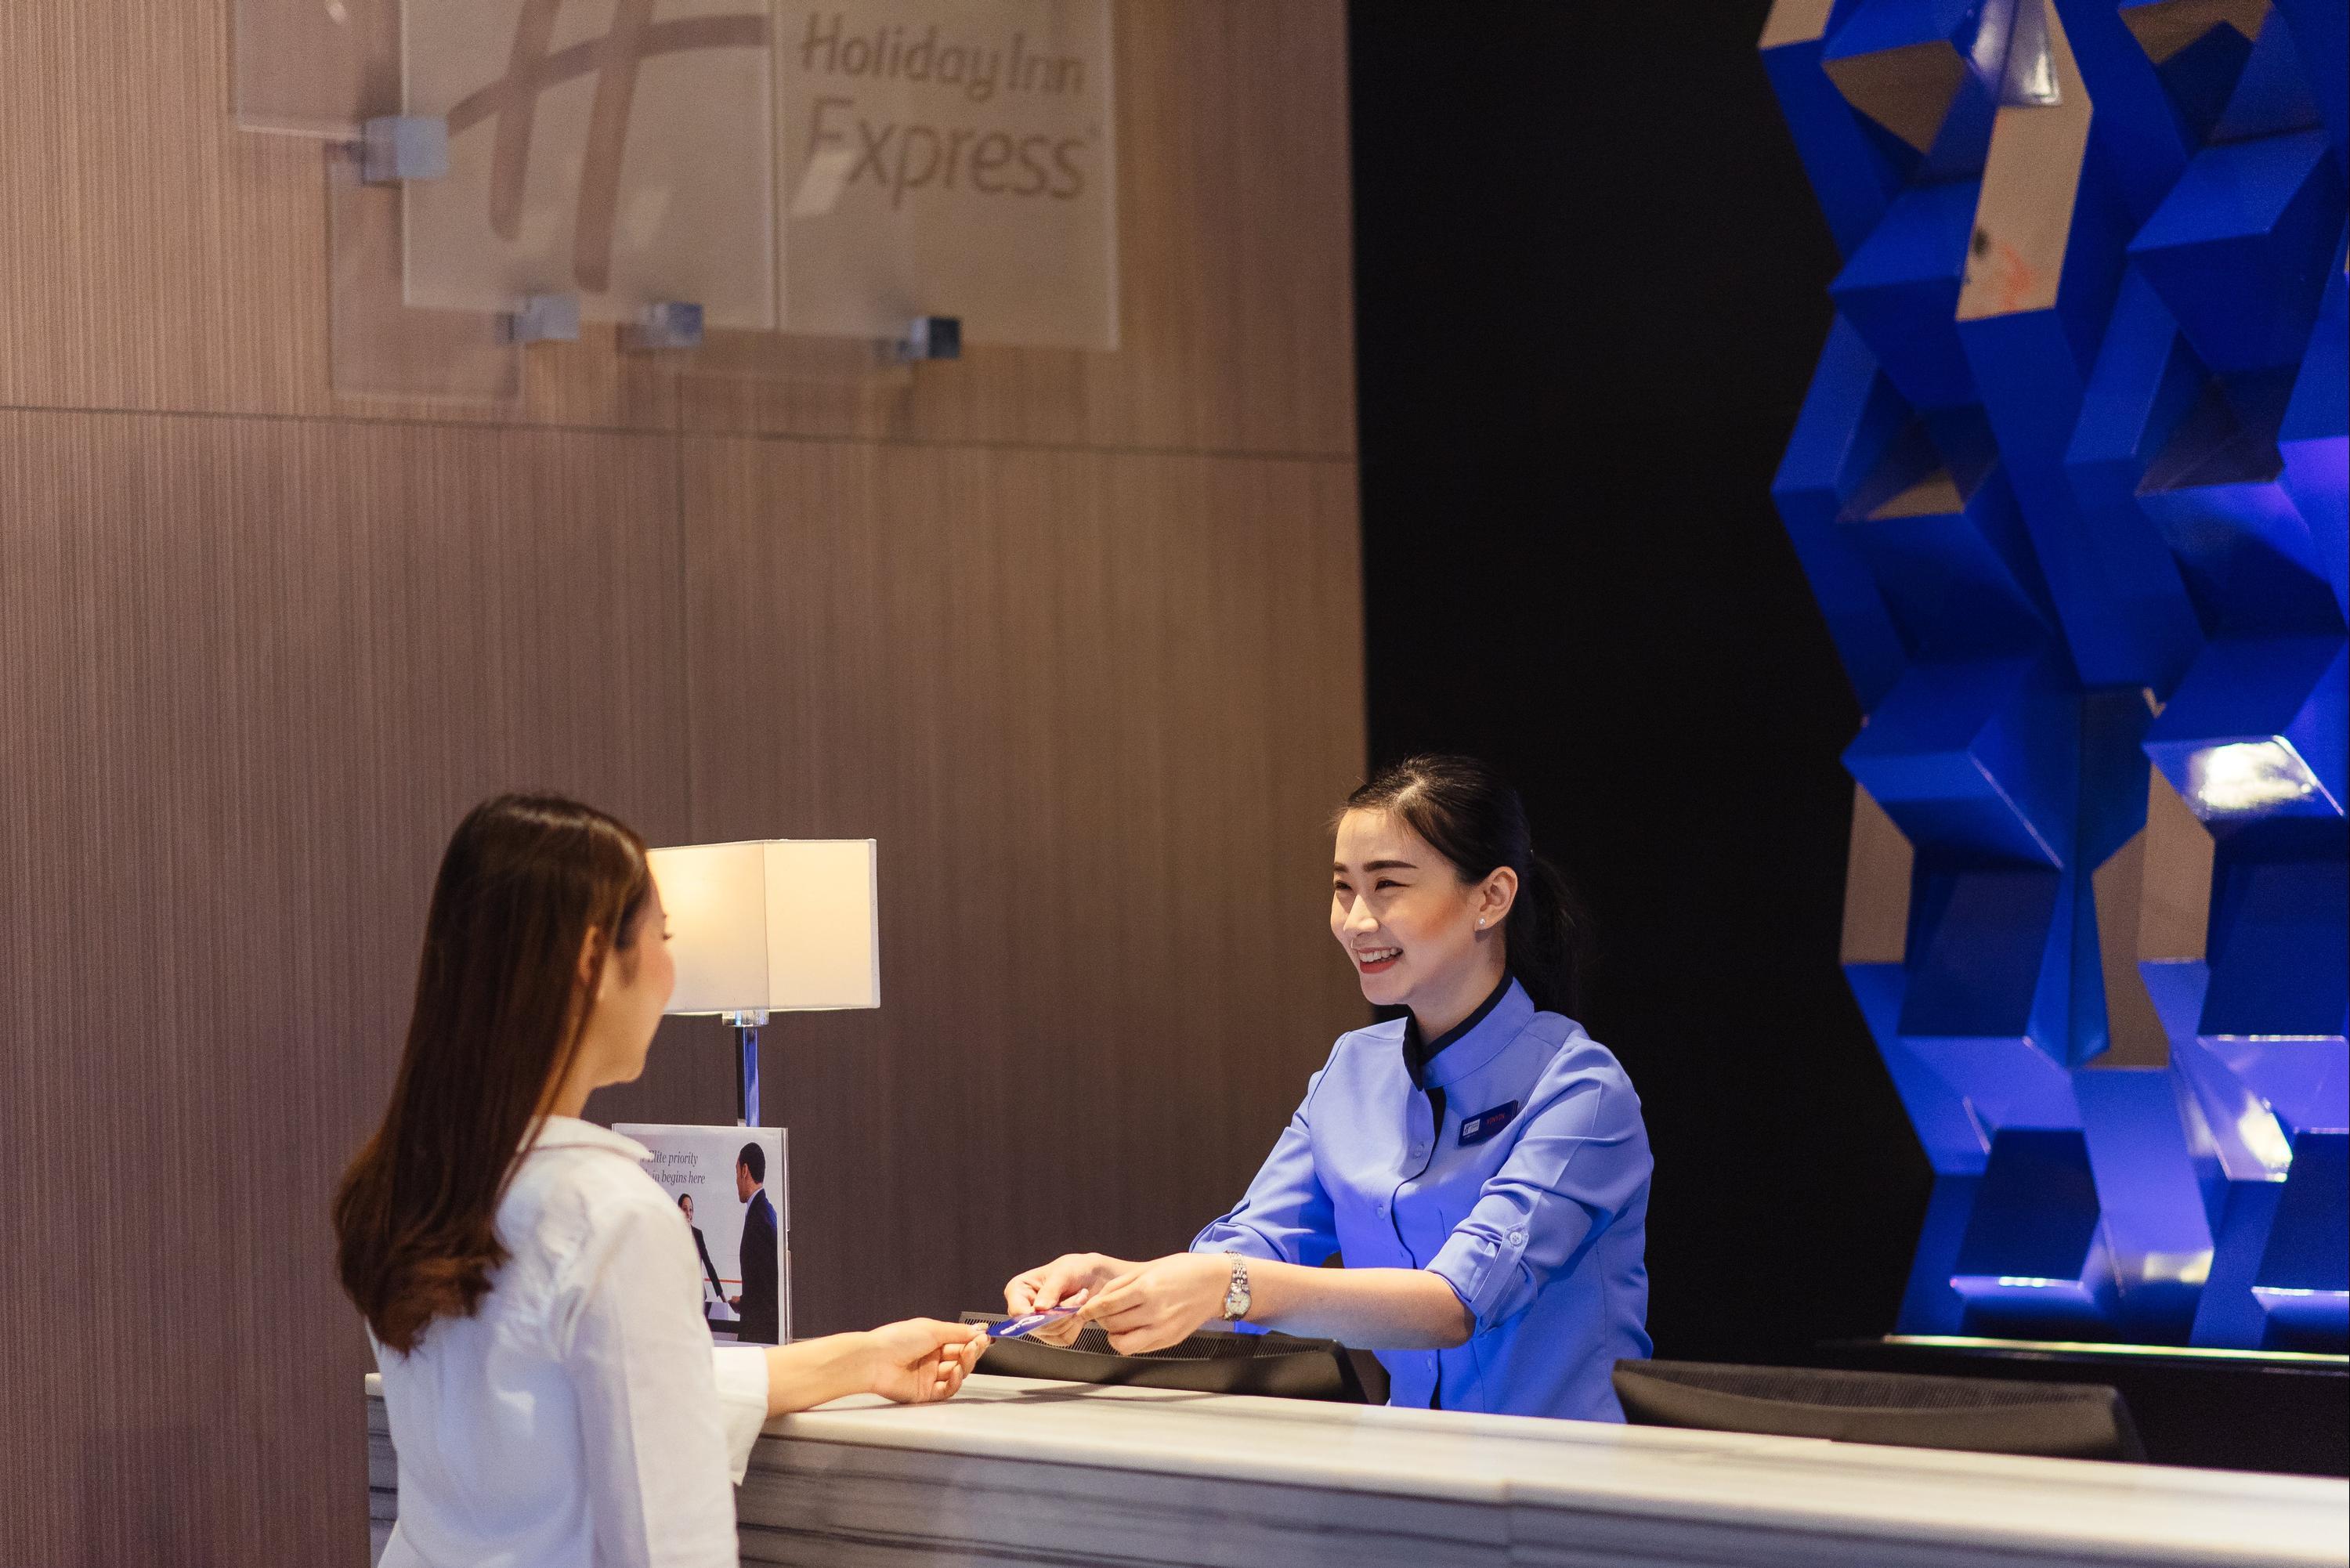 Holiday Inn Express Bangkok Siam Bangkok Thailand Compare Deals